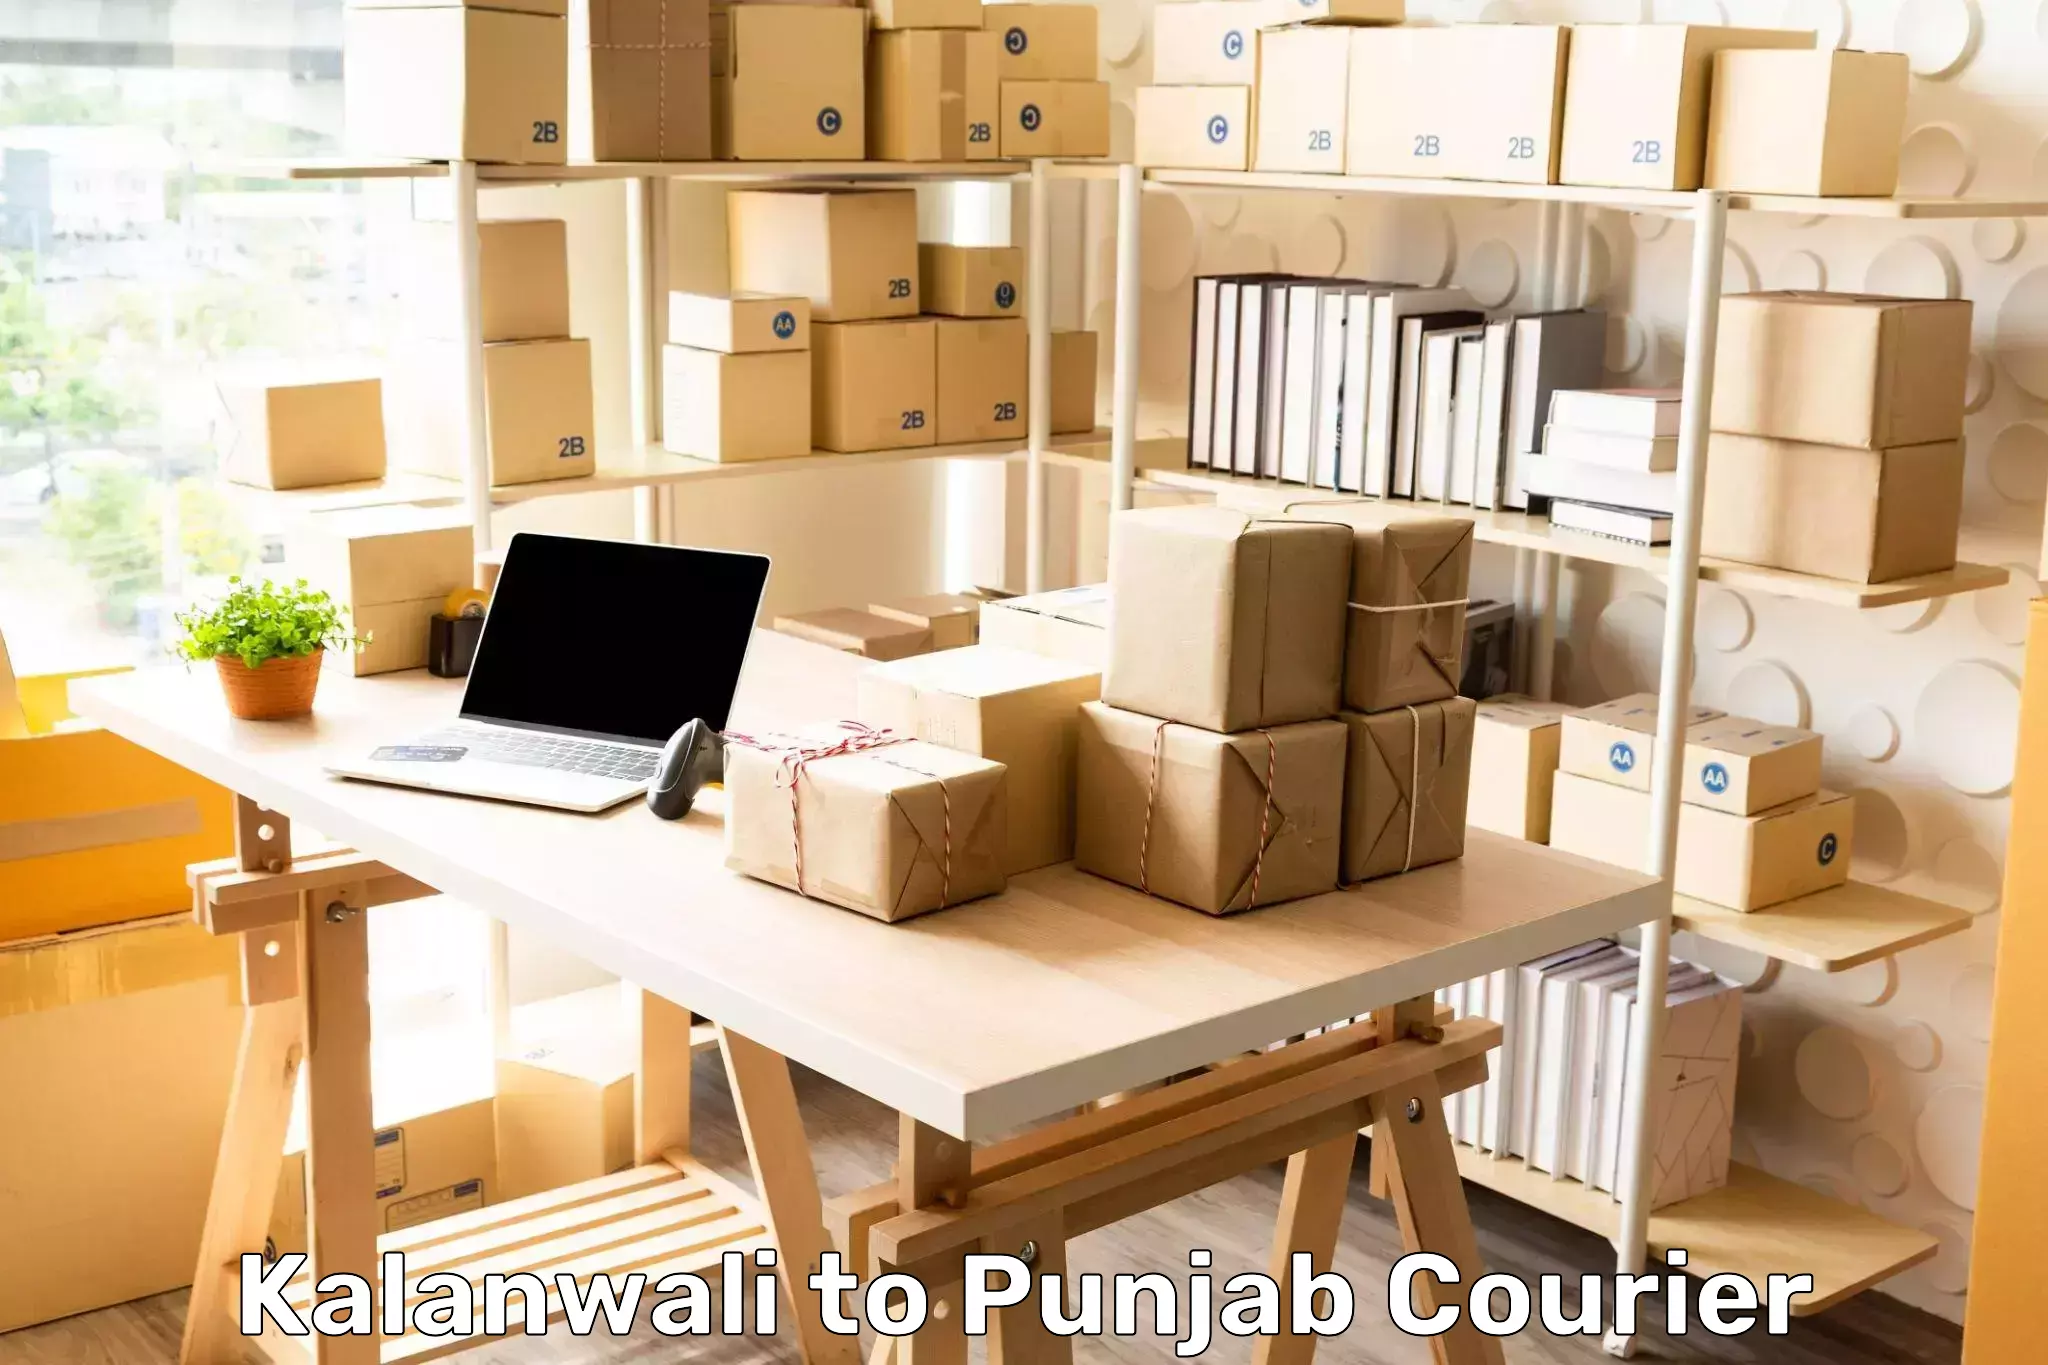 Supply chain efficiency Kalanwali to Punjab